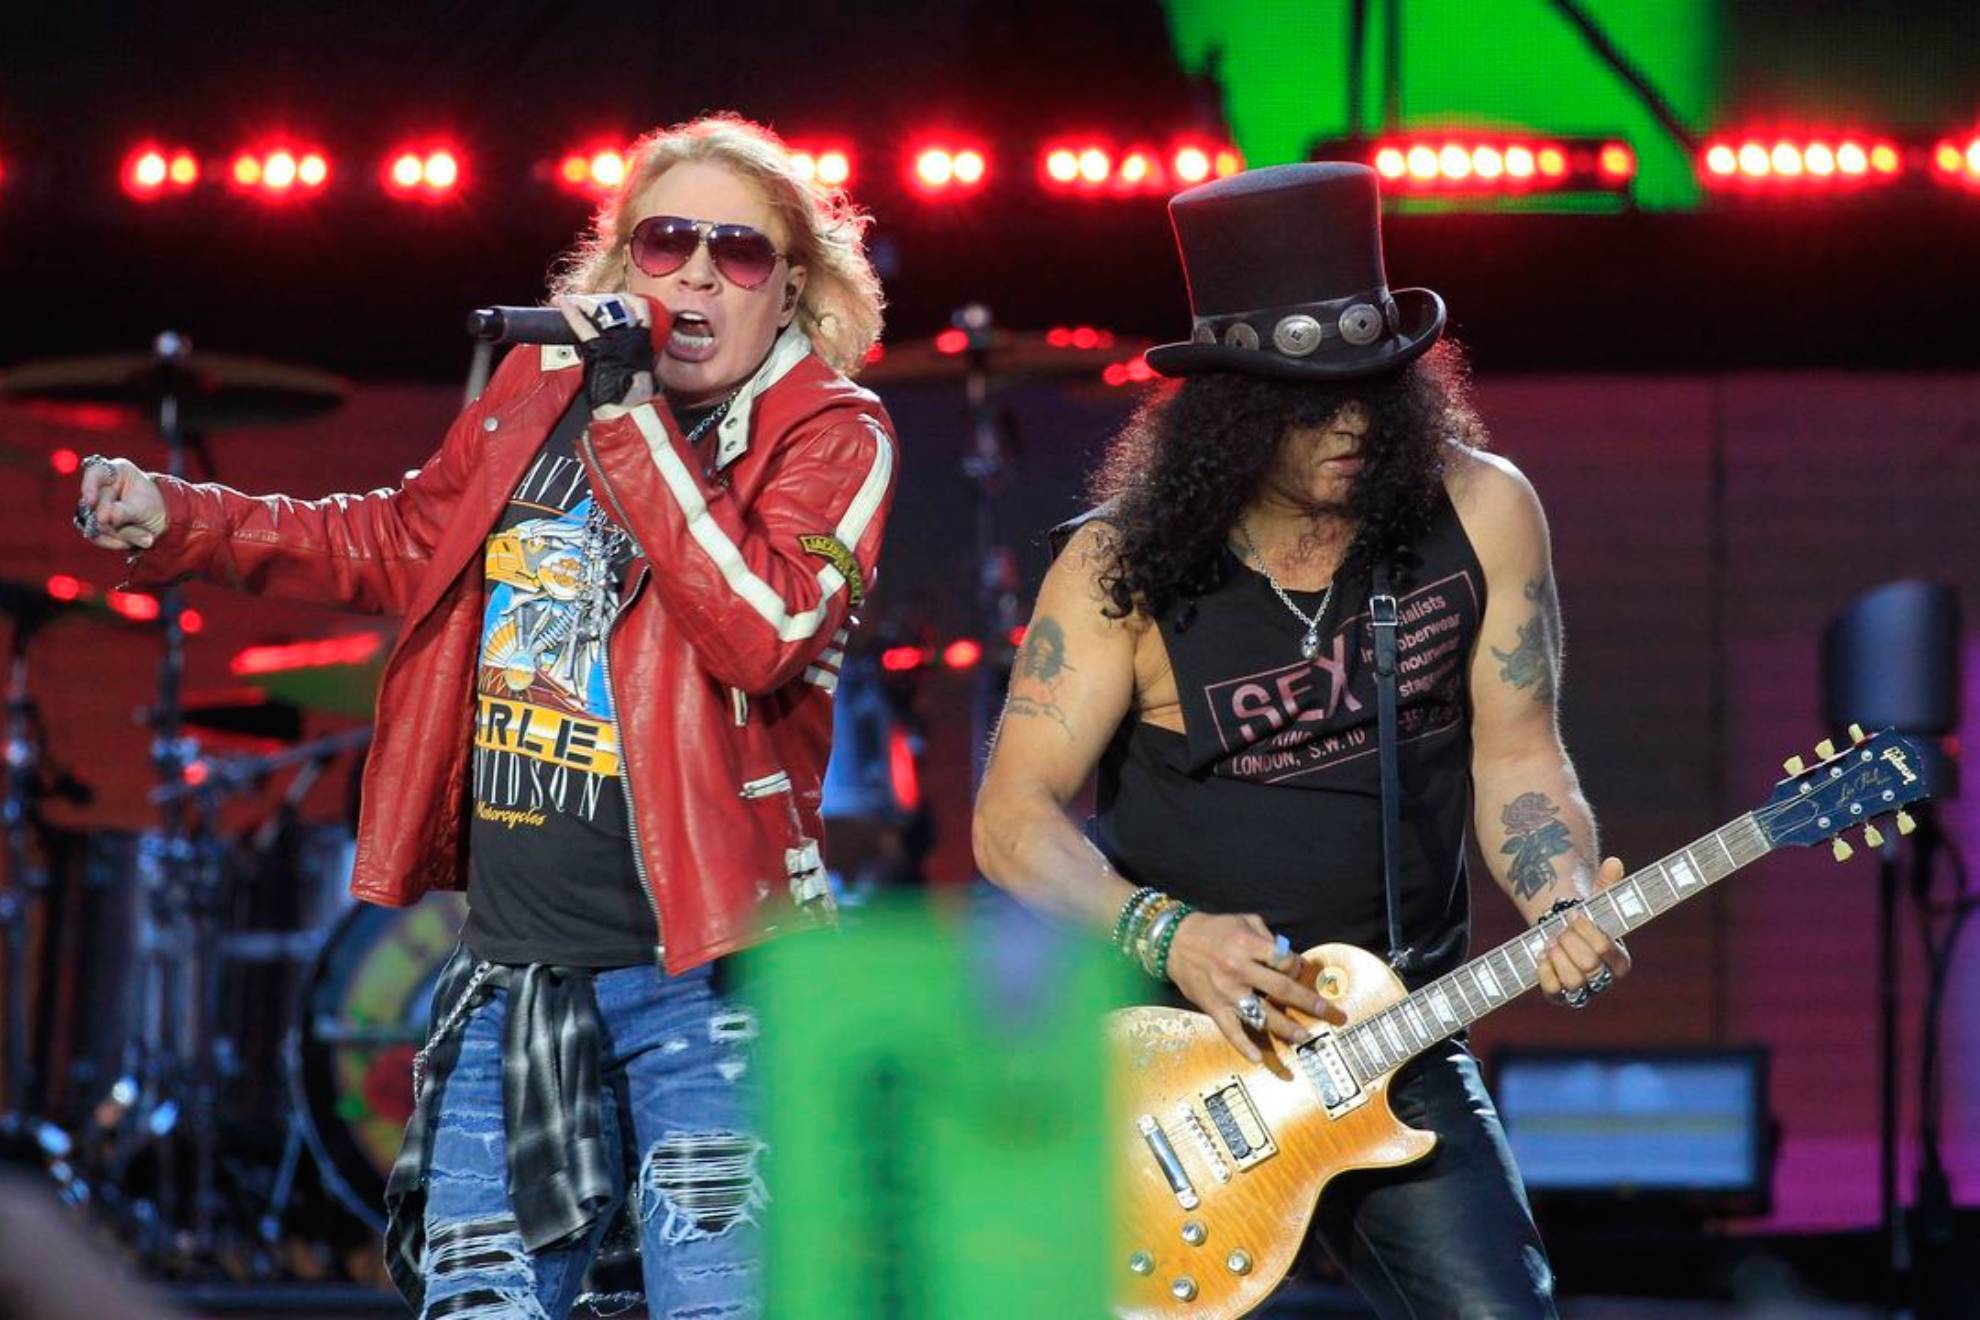 Guns N' Roses - Knocking On Heavens Door (Tradução) 